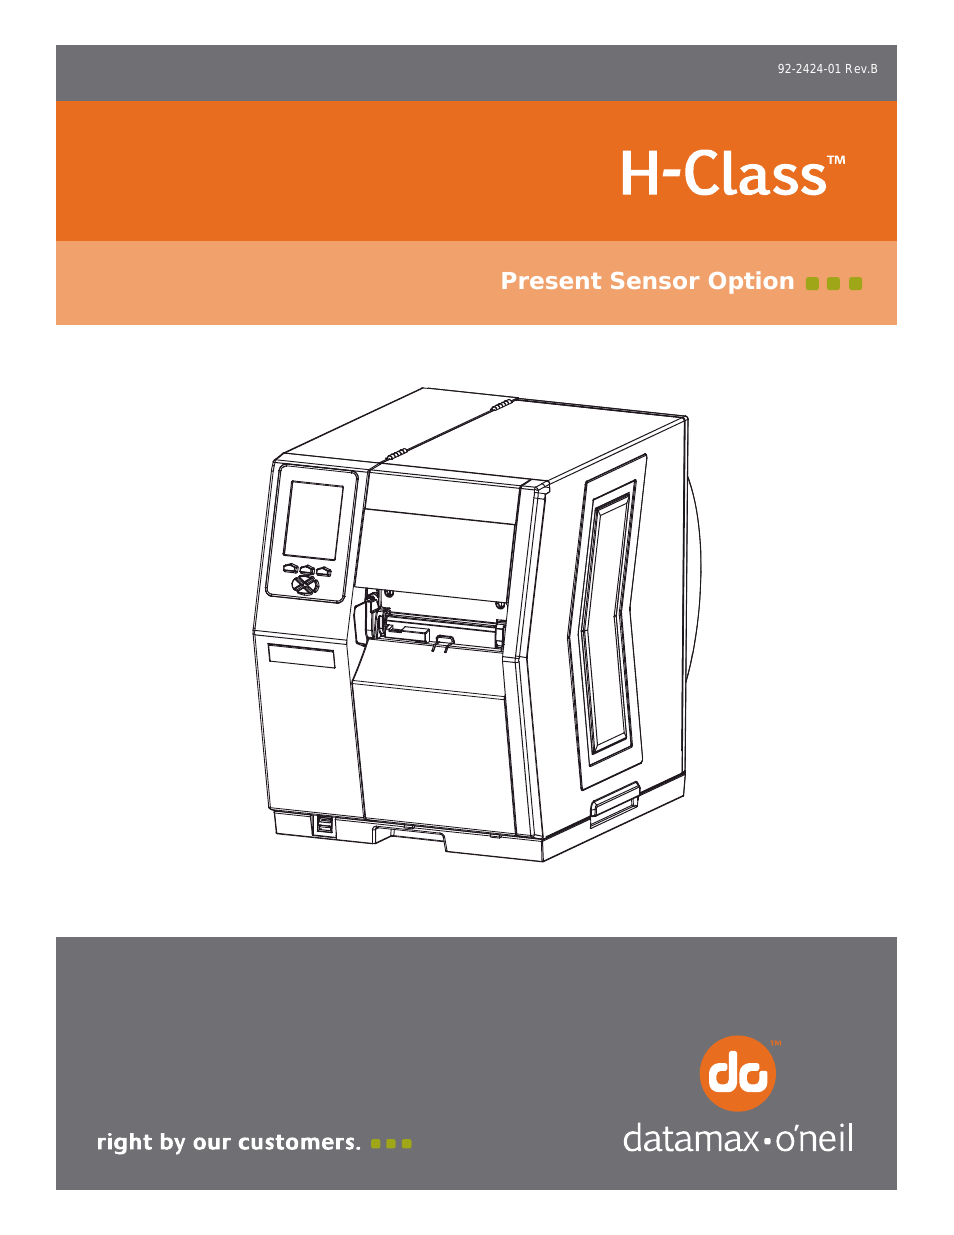 H-Class Present Sensor Option